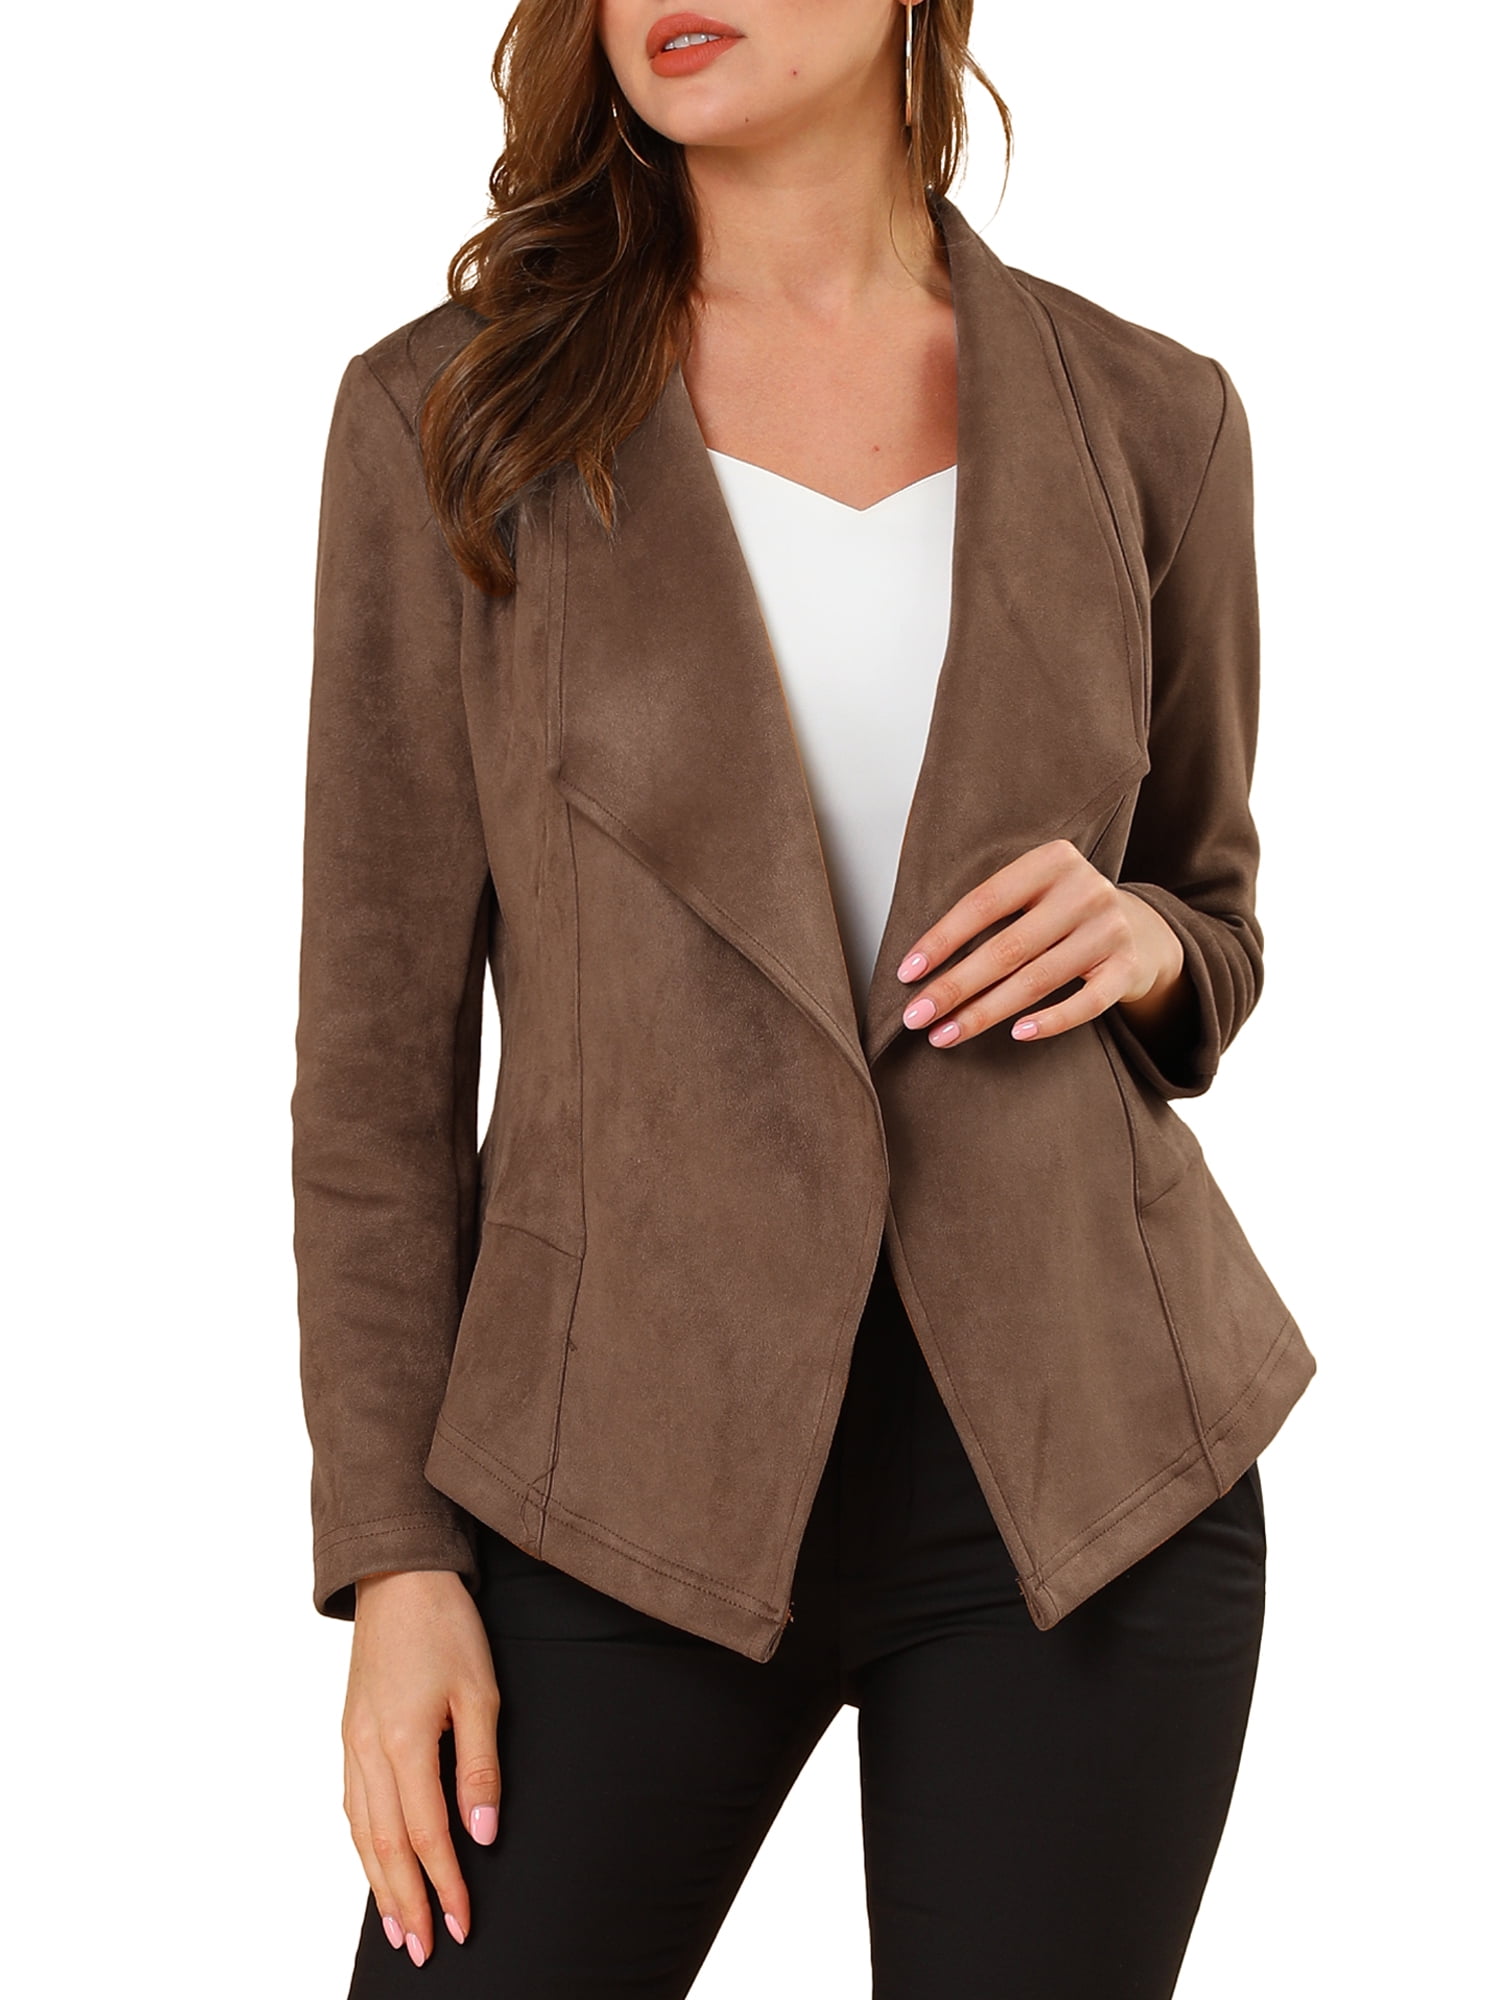 Be Jealous Womens Ladies Front Button Collared Casual Sleeveless Coat Blazer Denim Jacket UK Size 8-14 